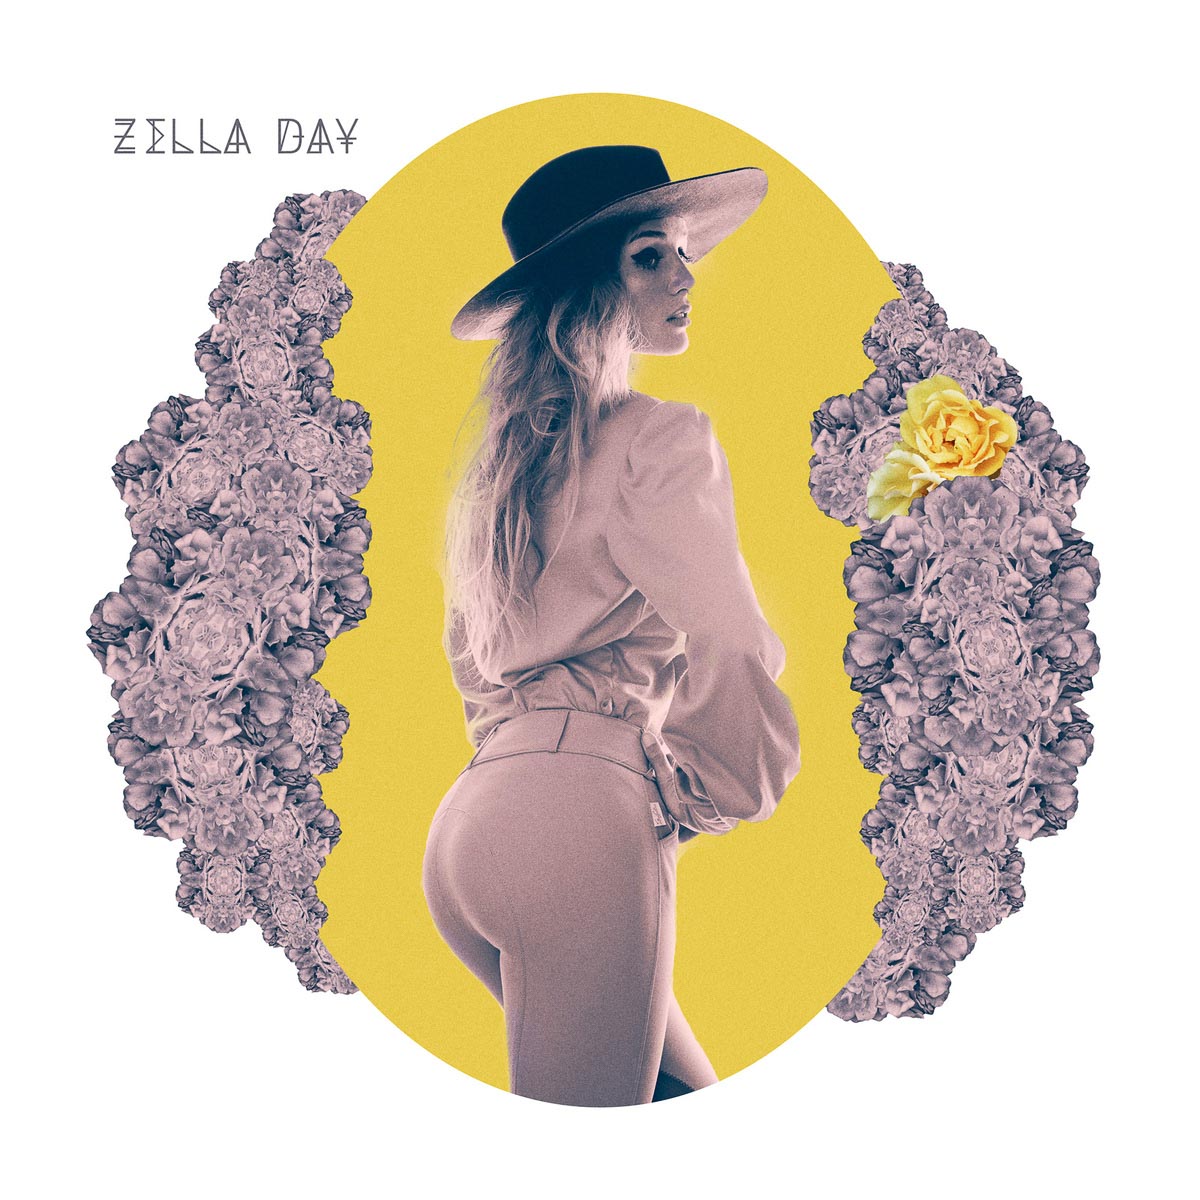 Zella day hypnotic. Zella Day. East of Eden Зелла Дэй. Zella Day обложка. Зелла Дэй американская певица.